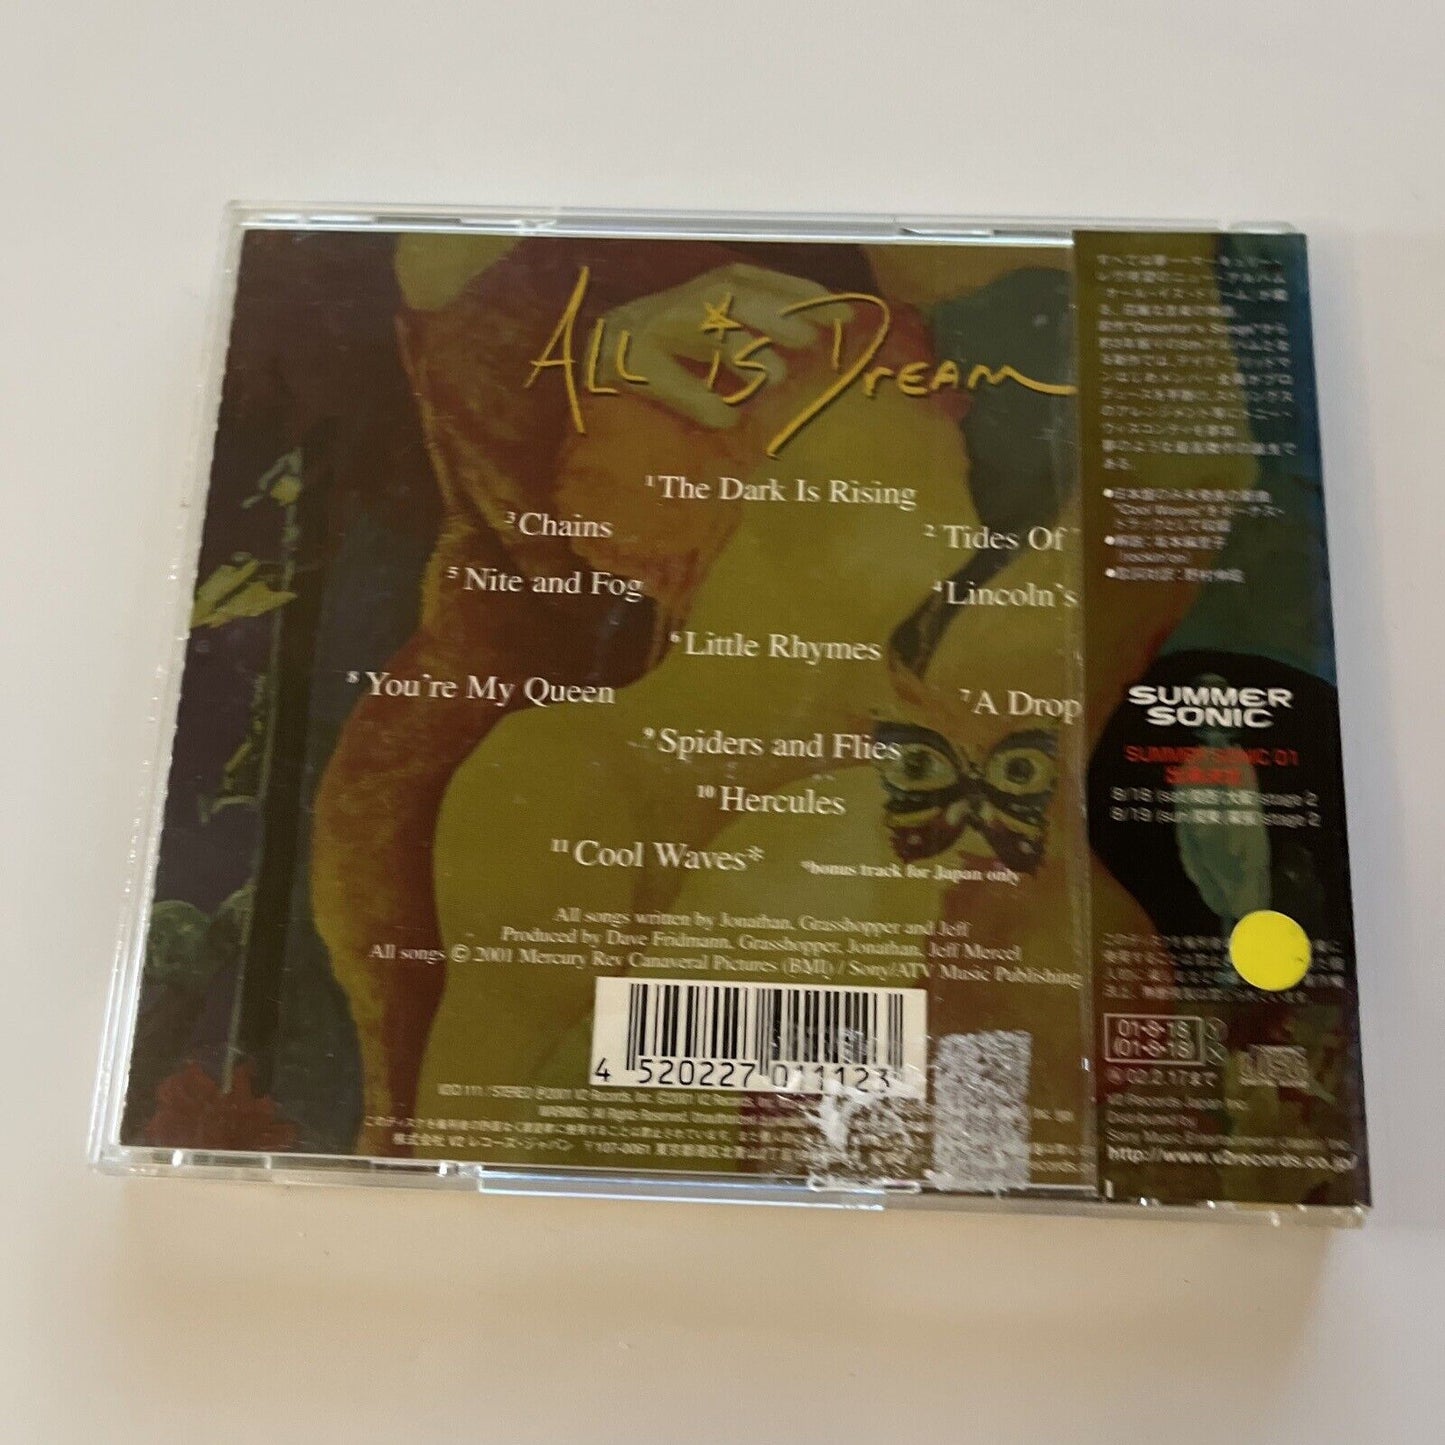 Mercury Rev - All Is Dream (CD, 2001) Obi Japan V2ci-111